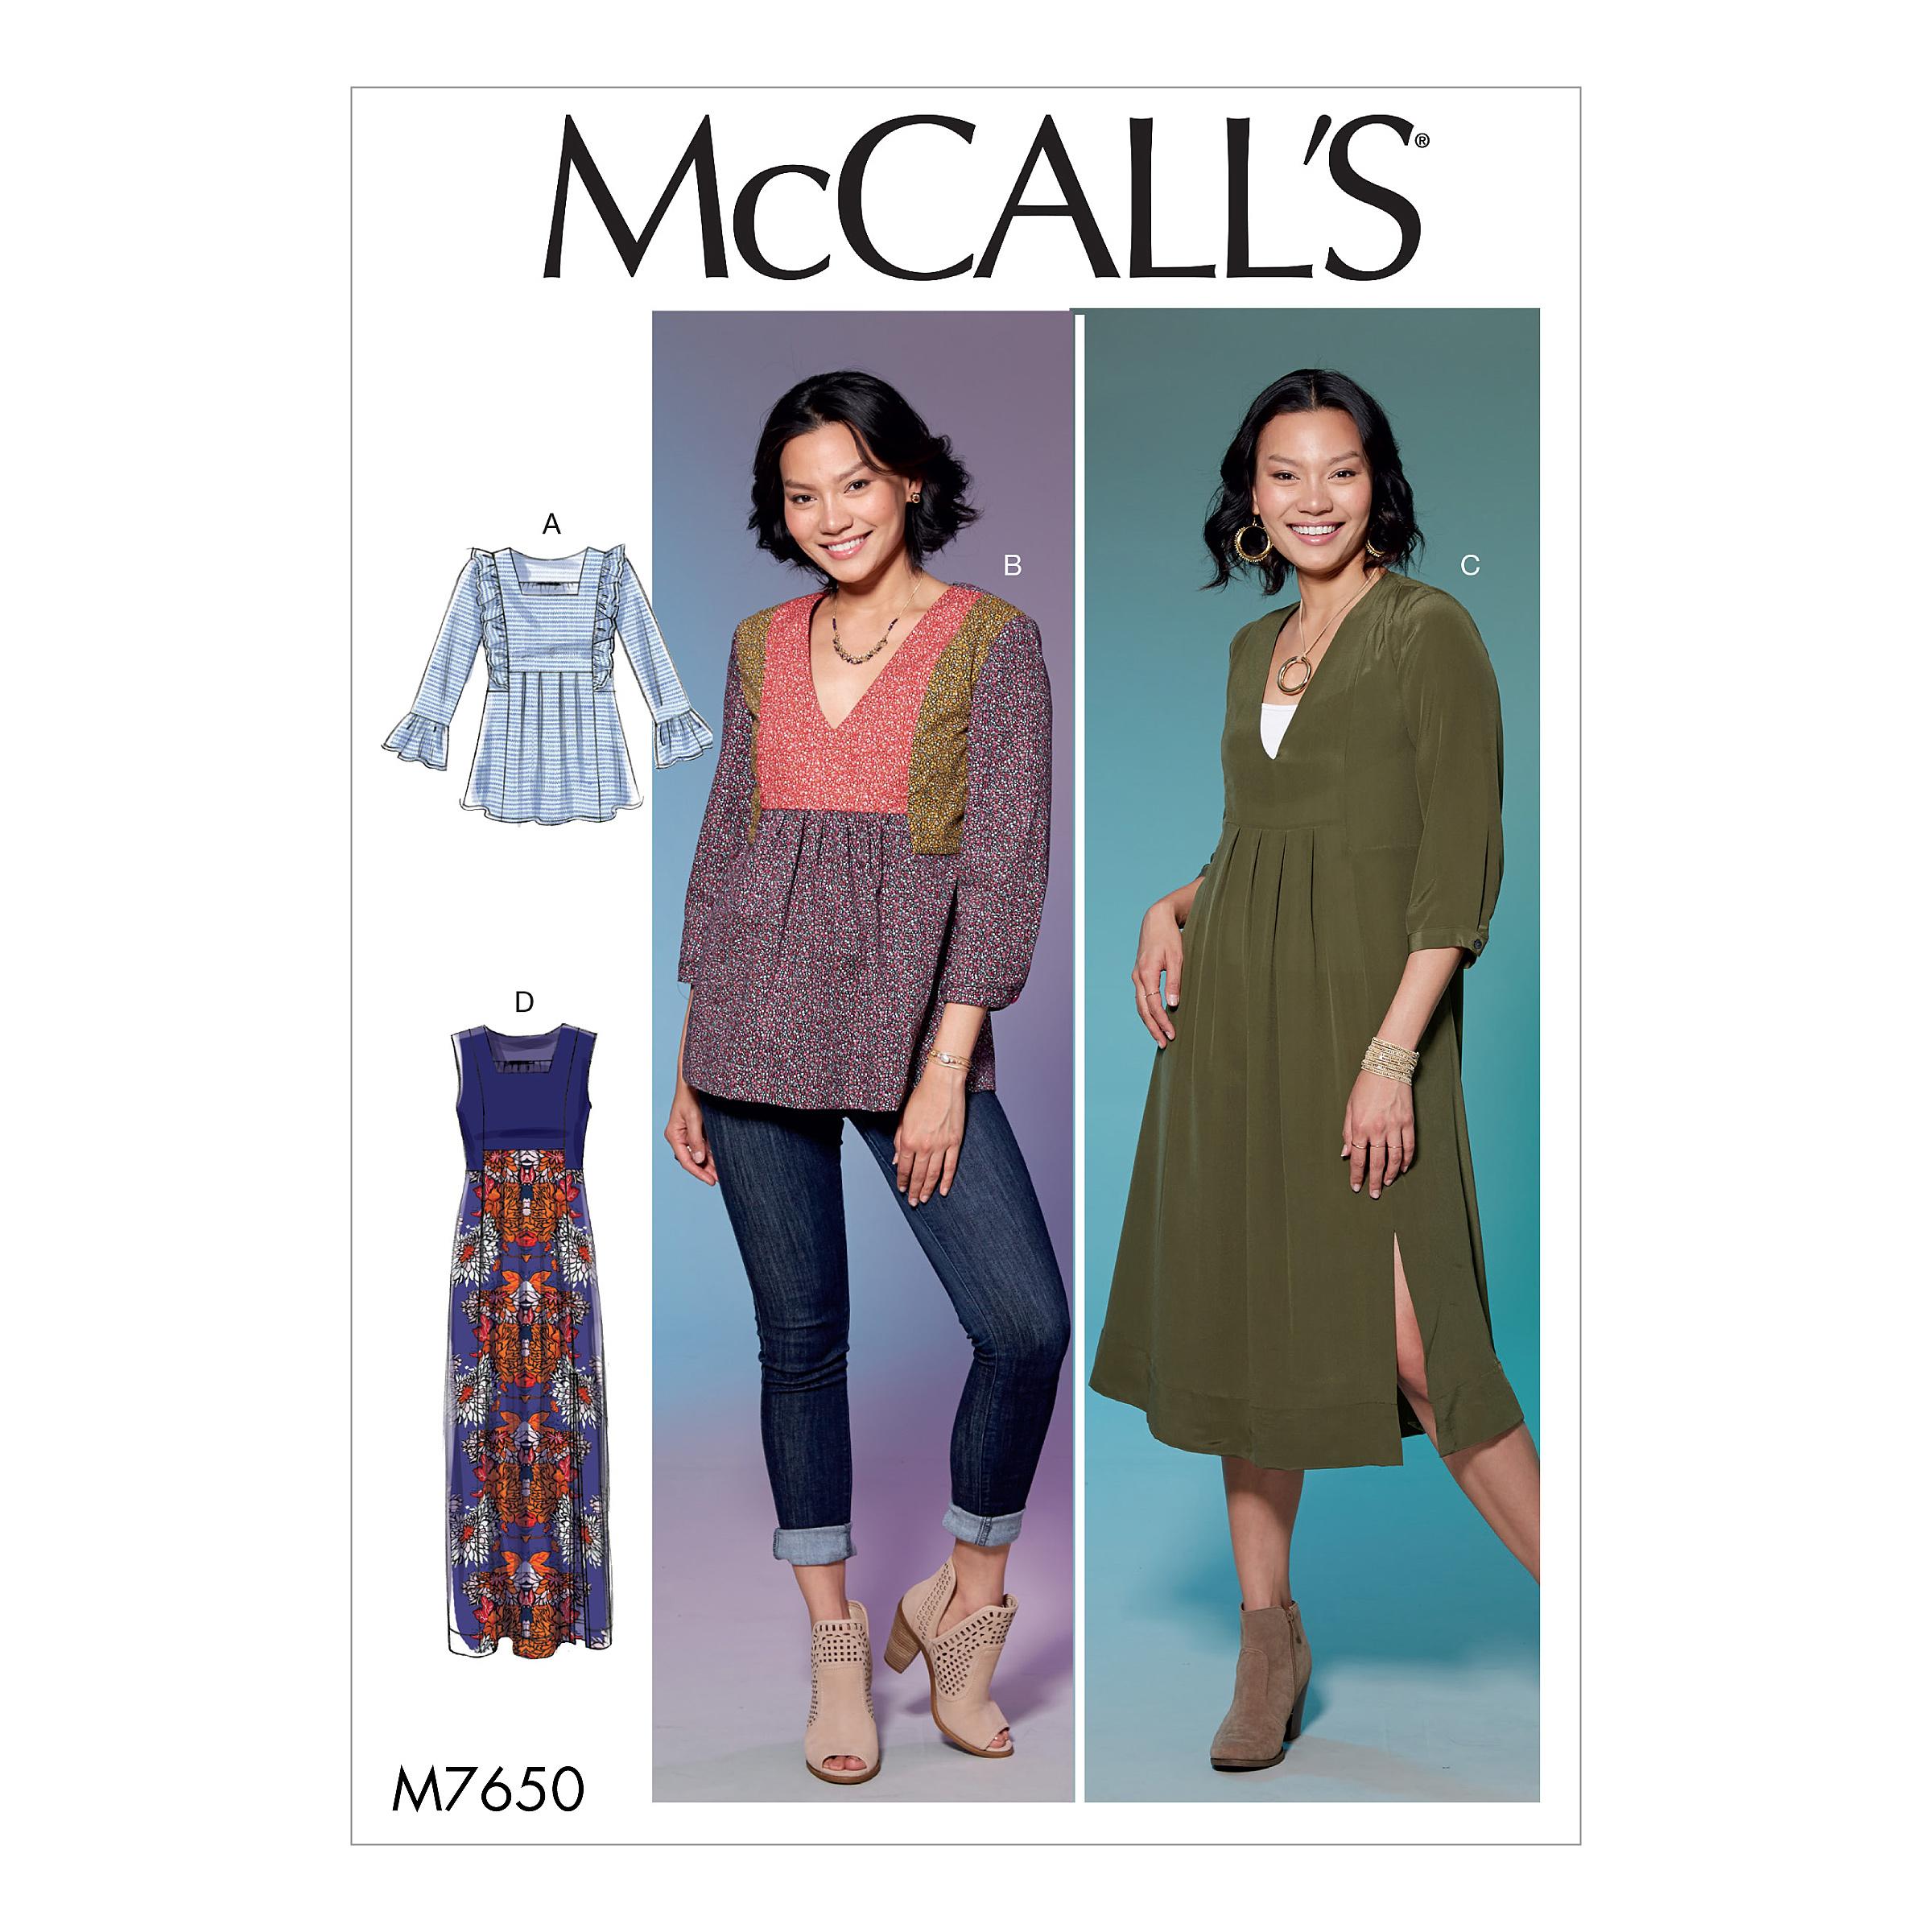 McCalls M7650 Misses Dresses, Misses Tops